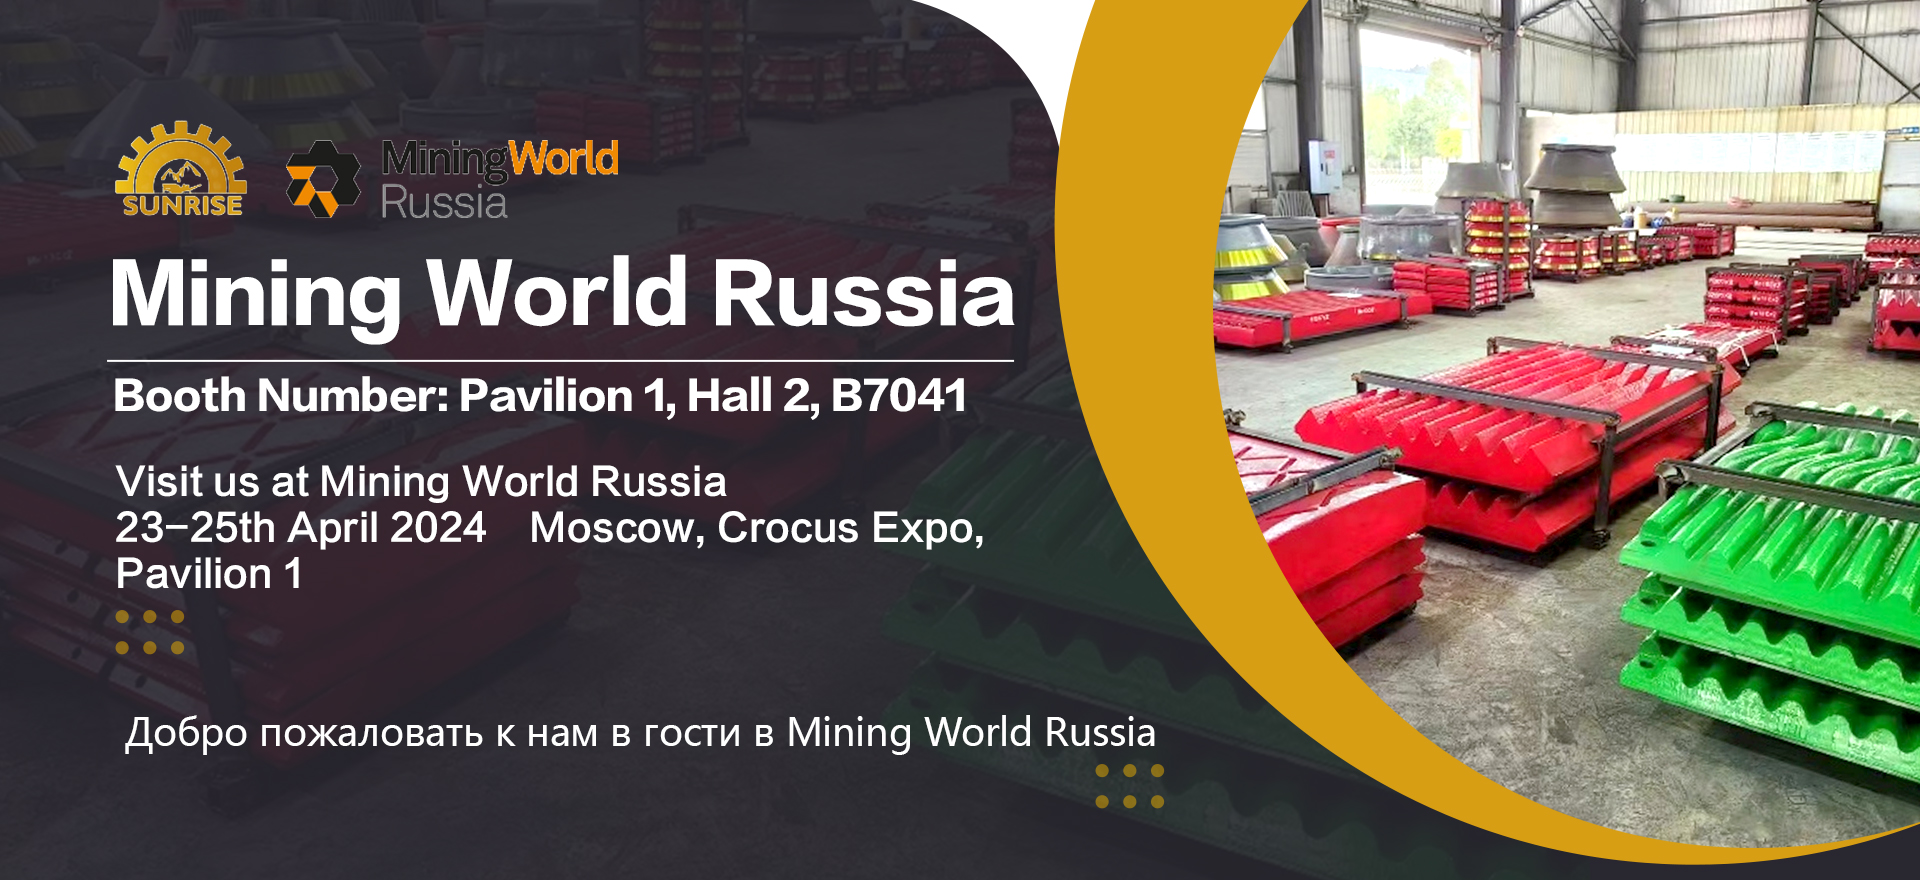 Sunrise Mining World Rusia